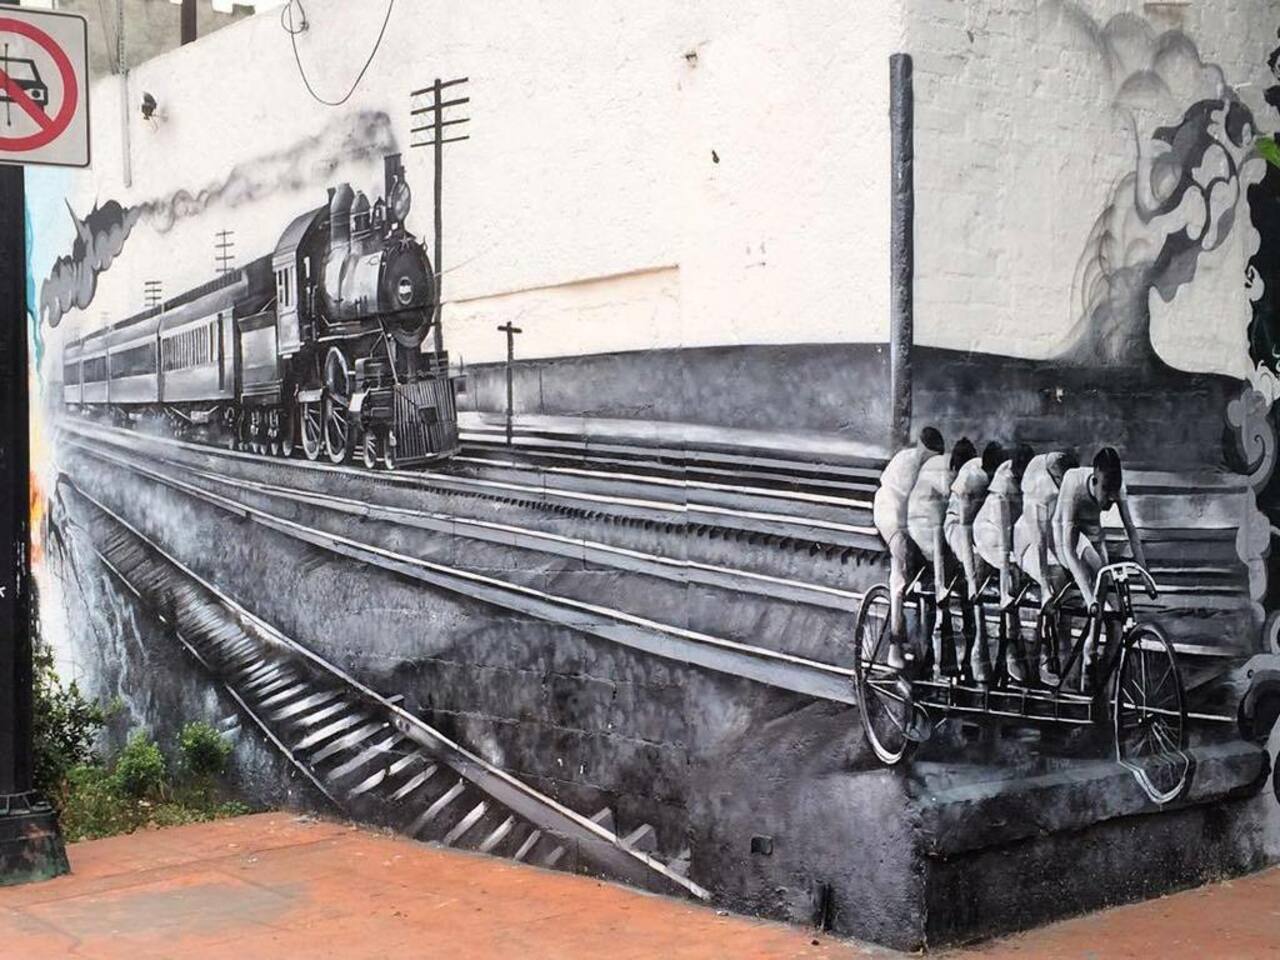 #streetart #arteurbano #urbanart #urban #art #mexico #cdmx #mexicodf #mural #graffiti #streetartmexico #urbanwalls … http://t.co/c59N5BpwB4